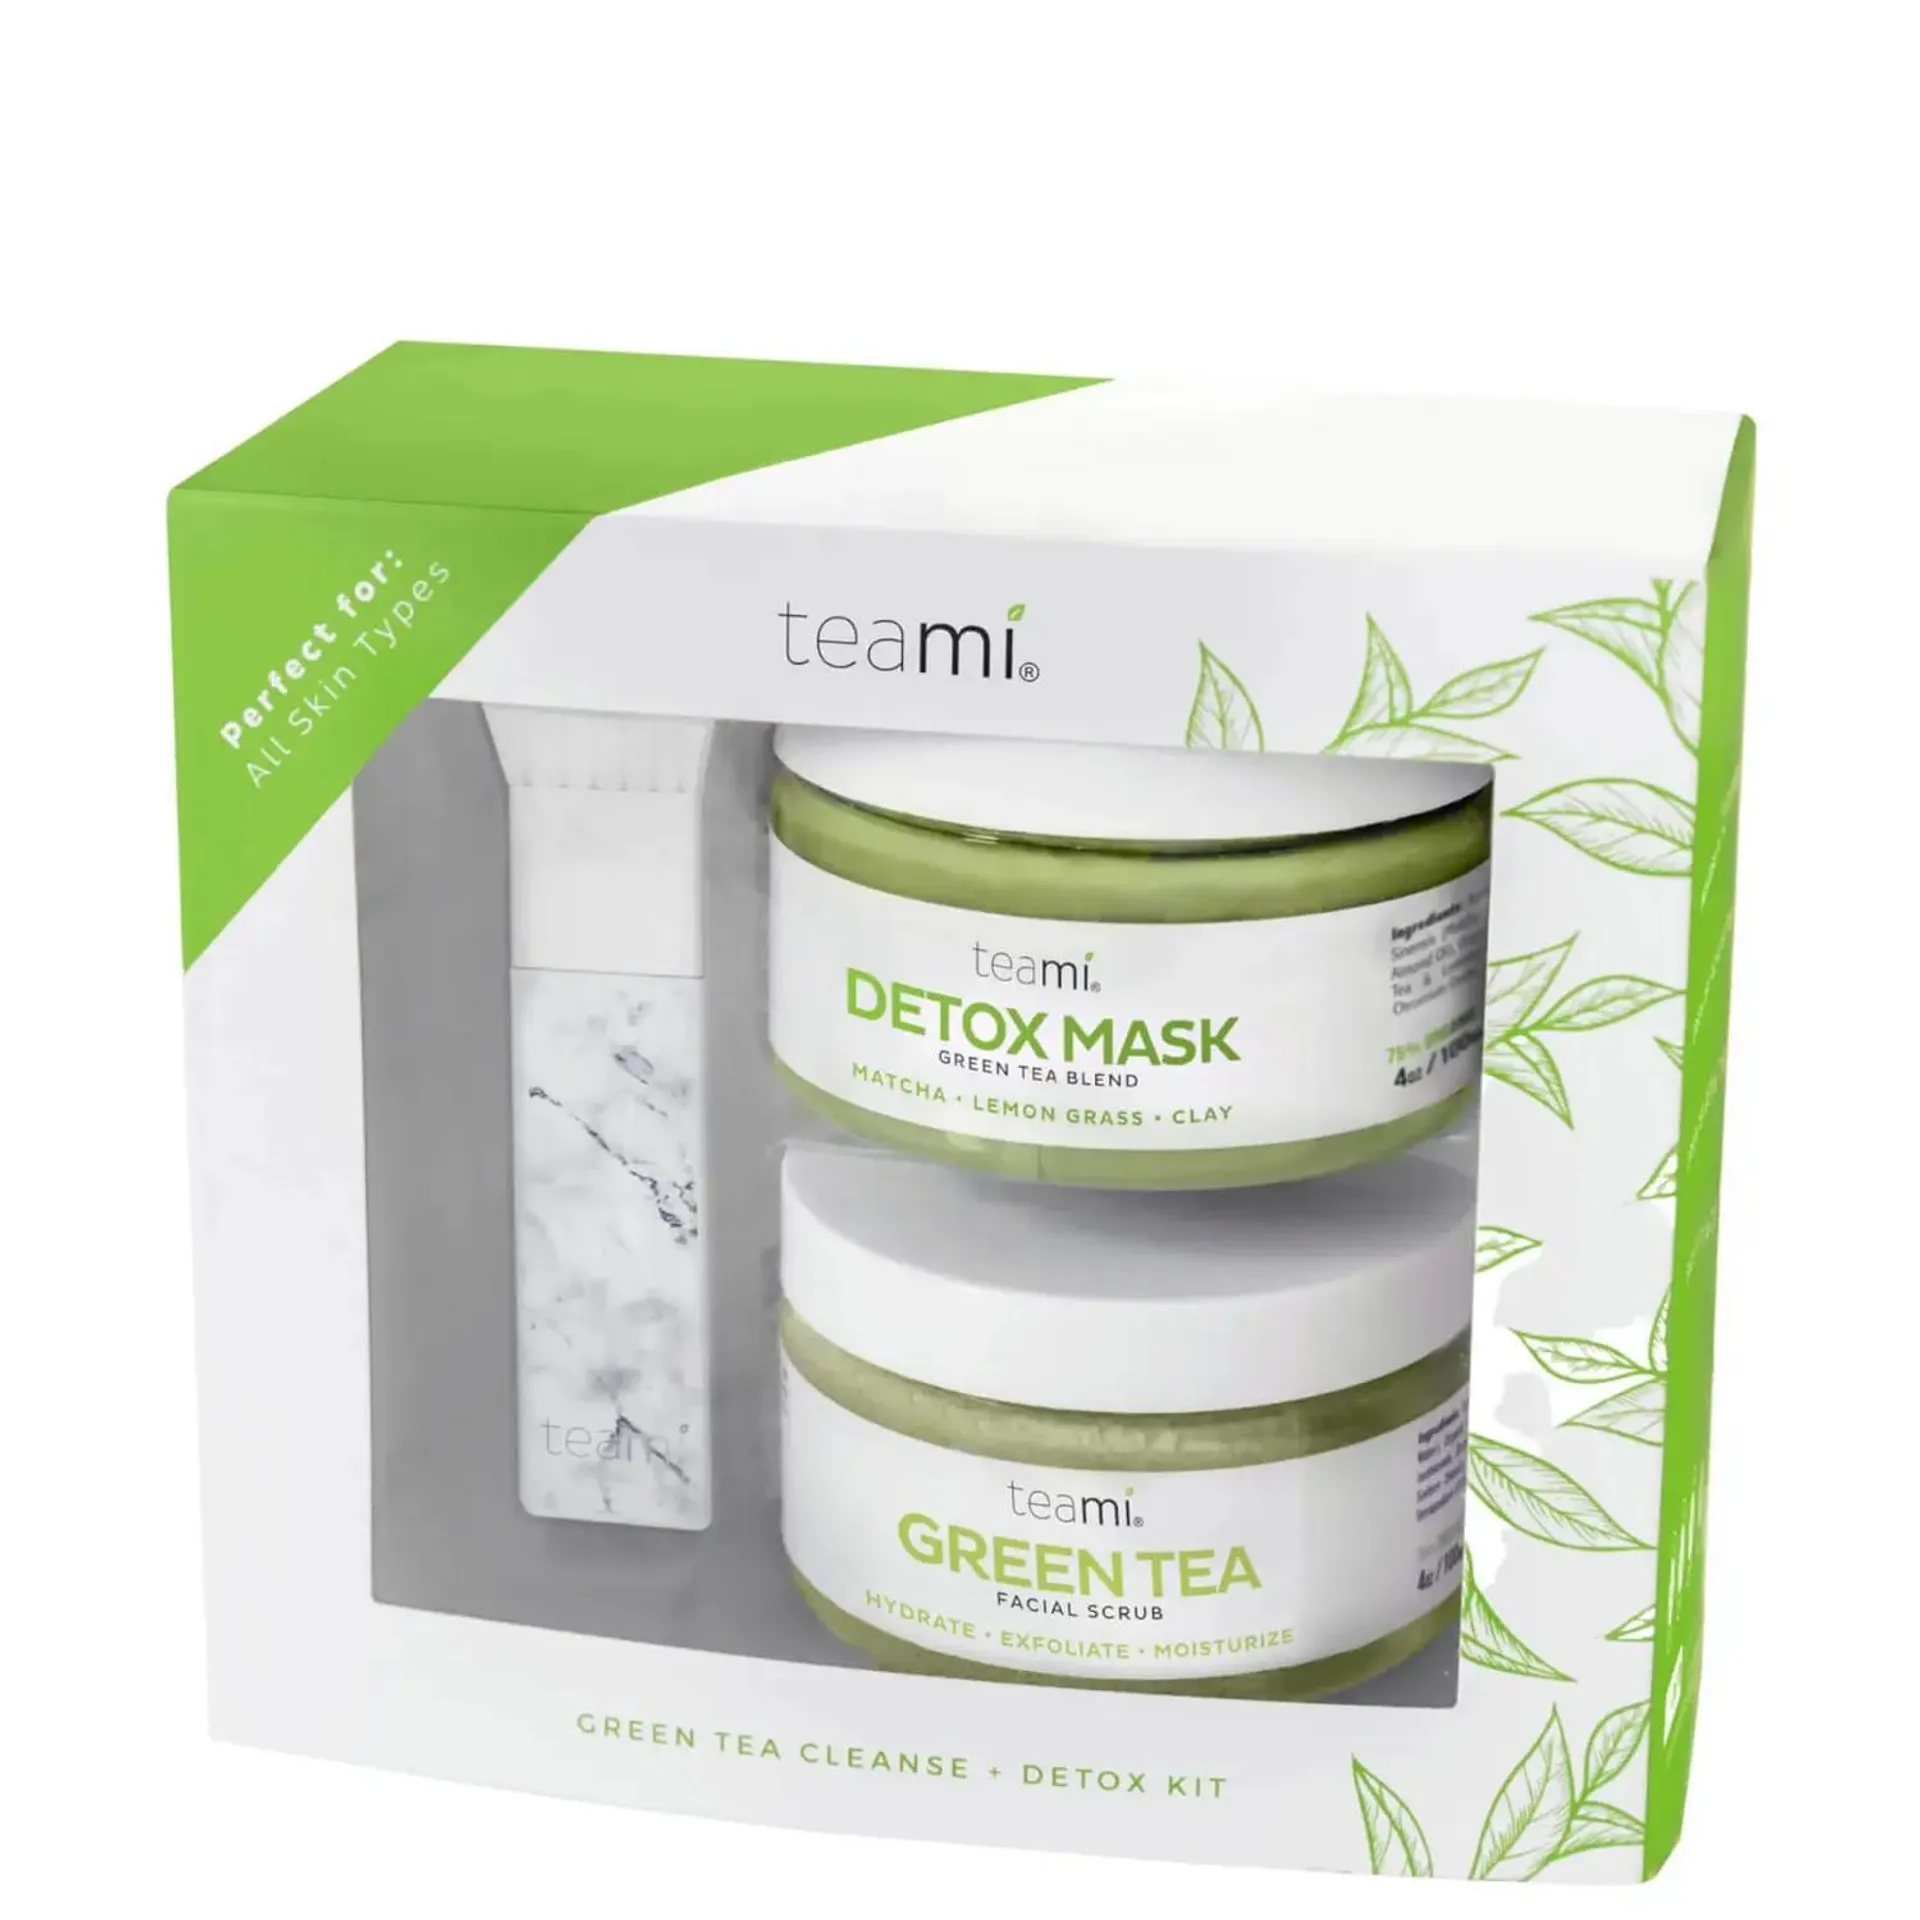 Teami Green Tea and Detox Kit